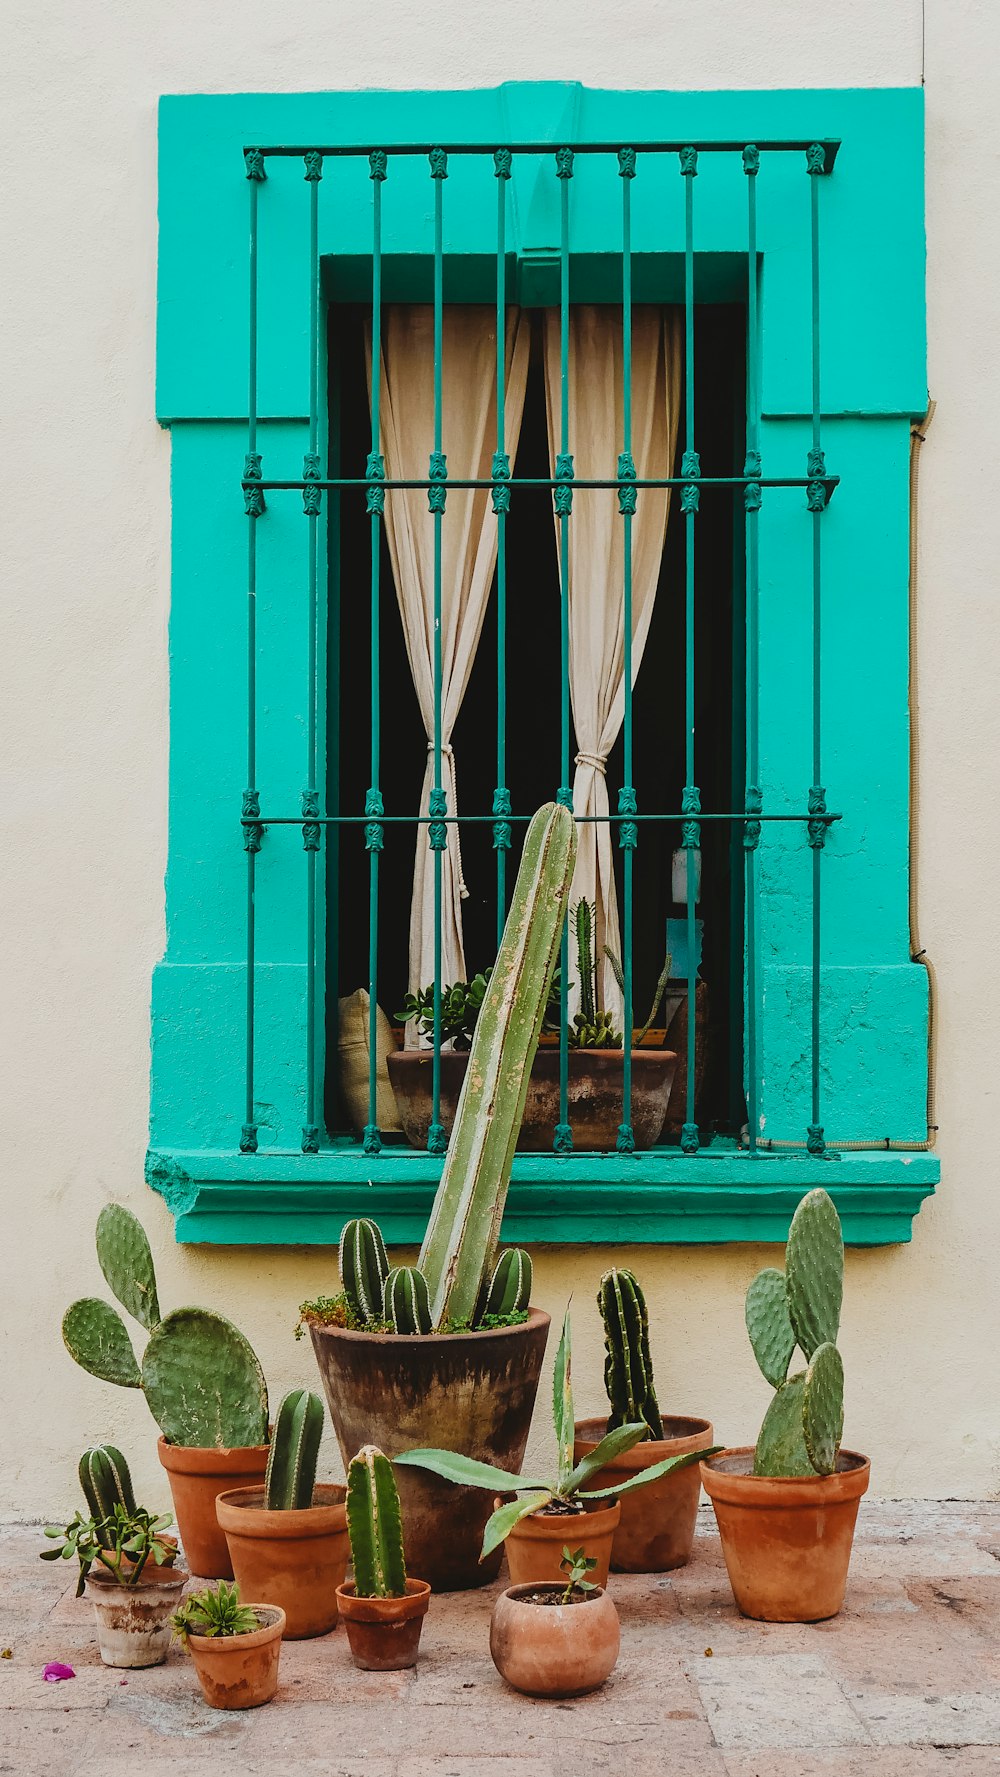 cactus near window